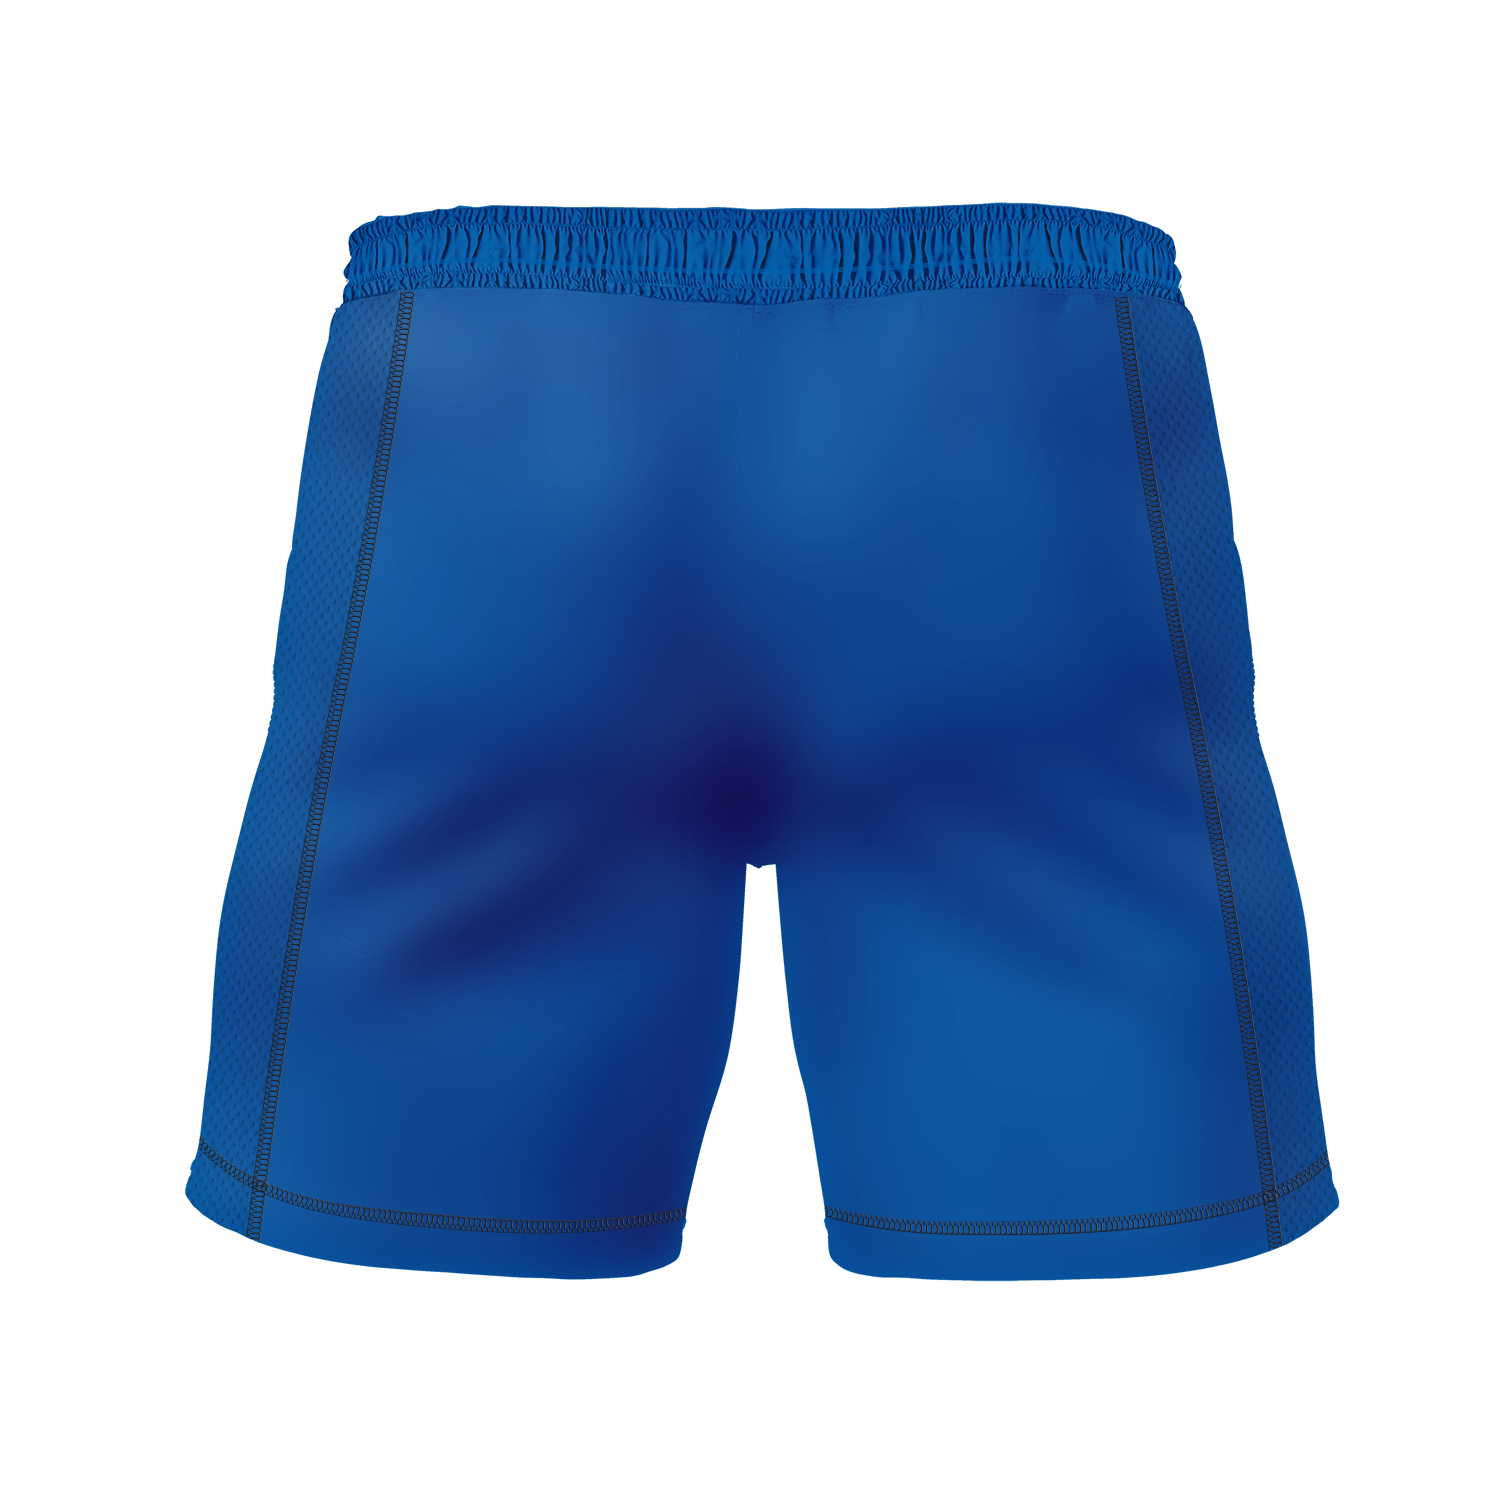 Tsunami JJ men's 7" fight shorts Ranked, blue